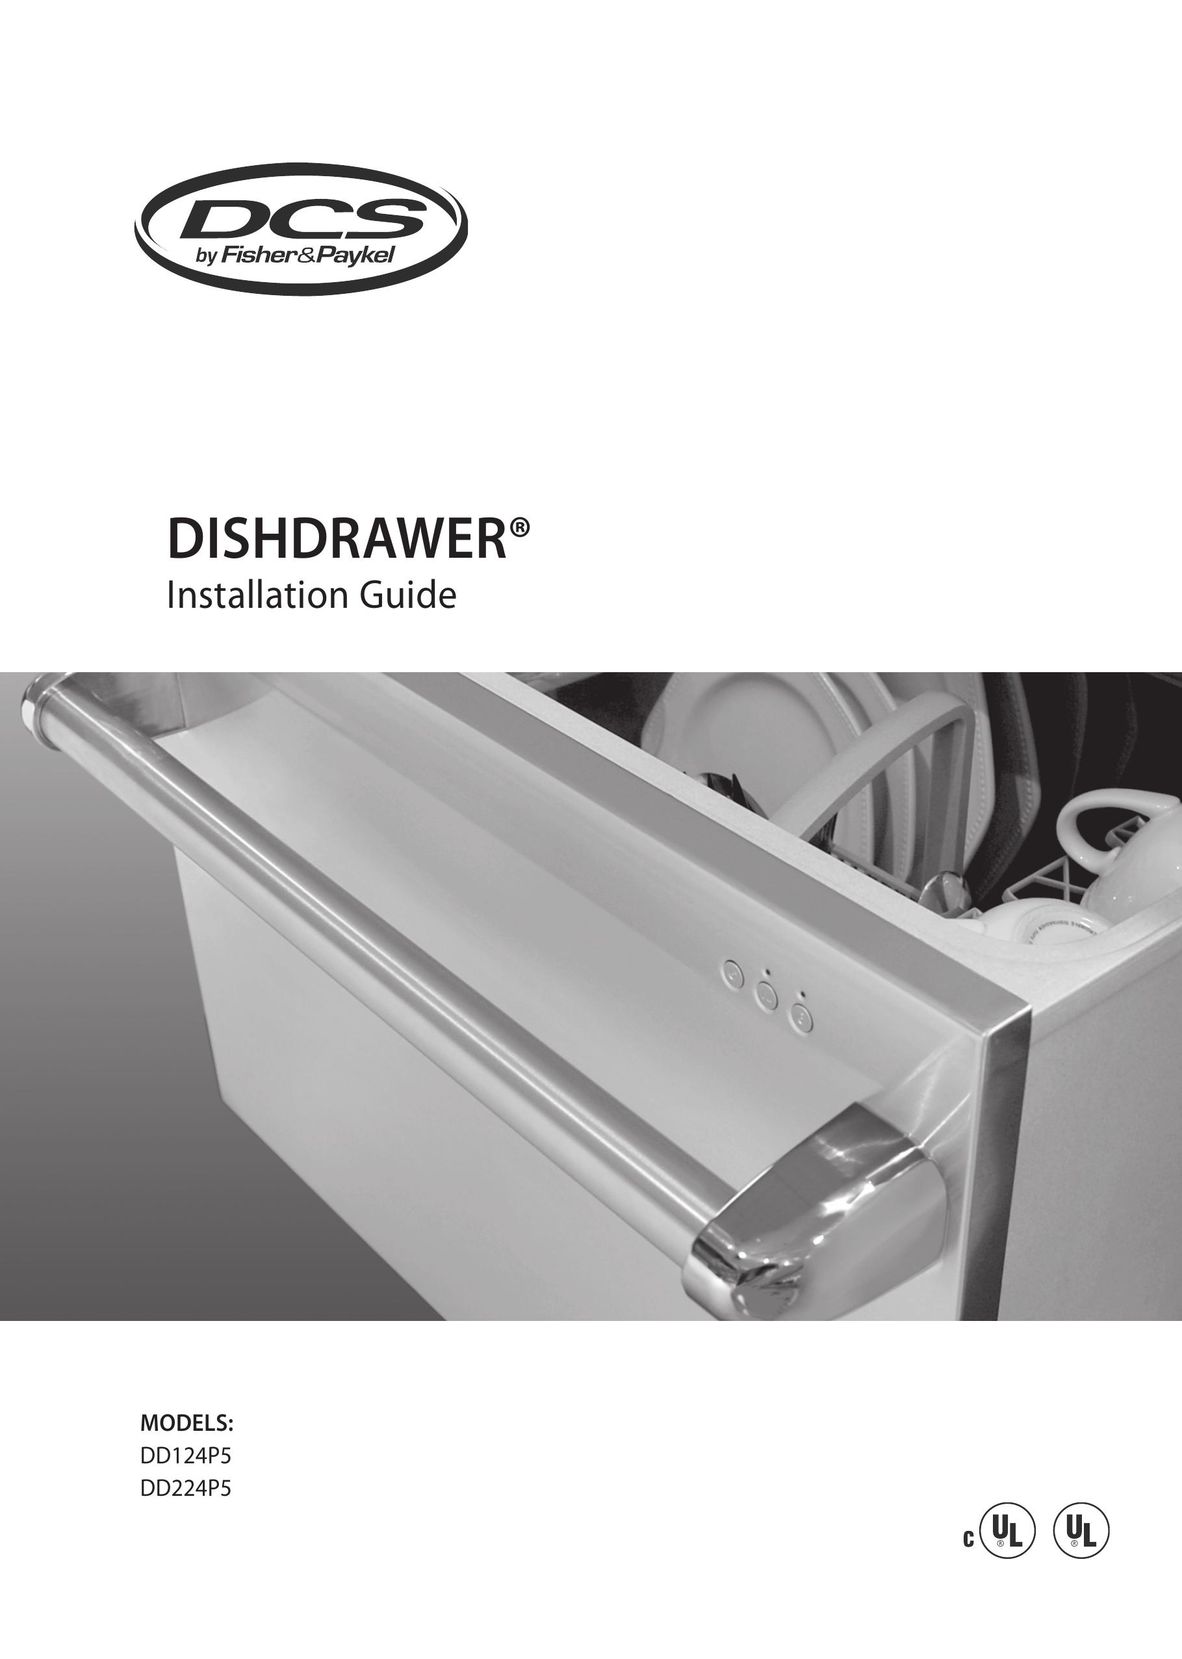 Fisher & Paykel DCS DD124P5 Dishwasher User Manual